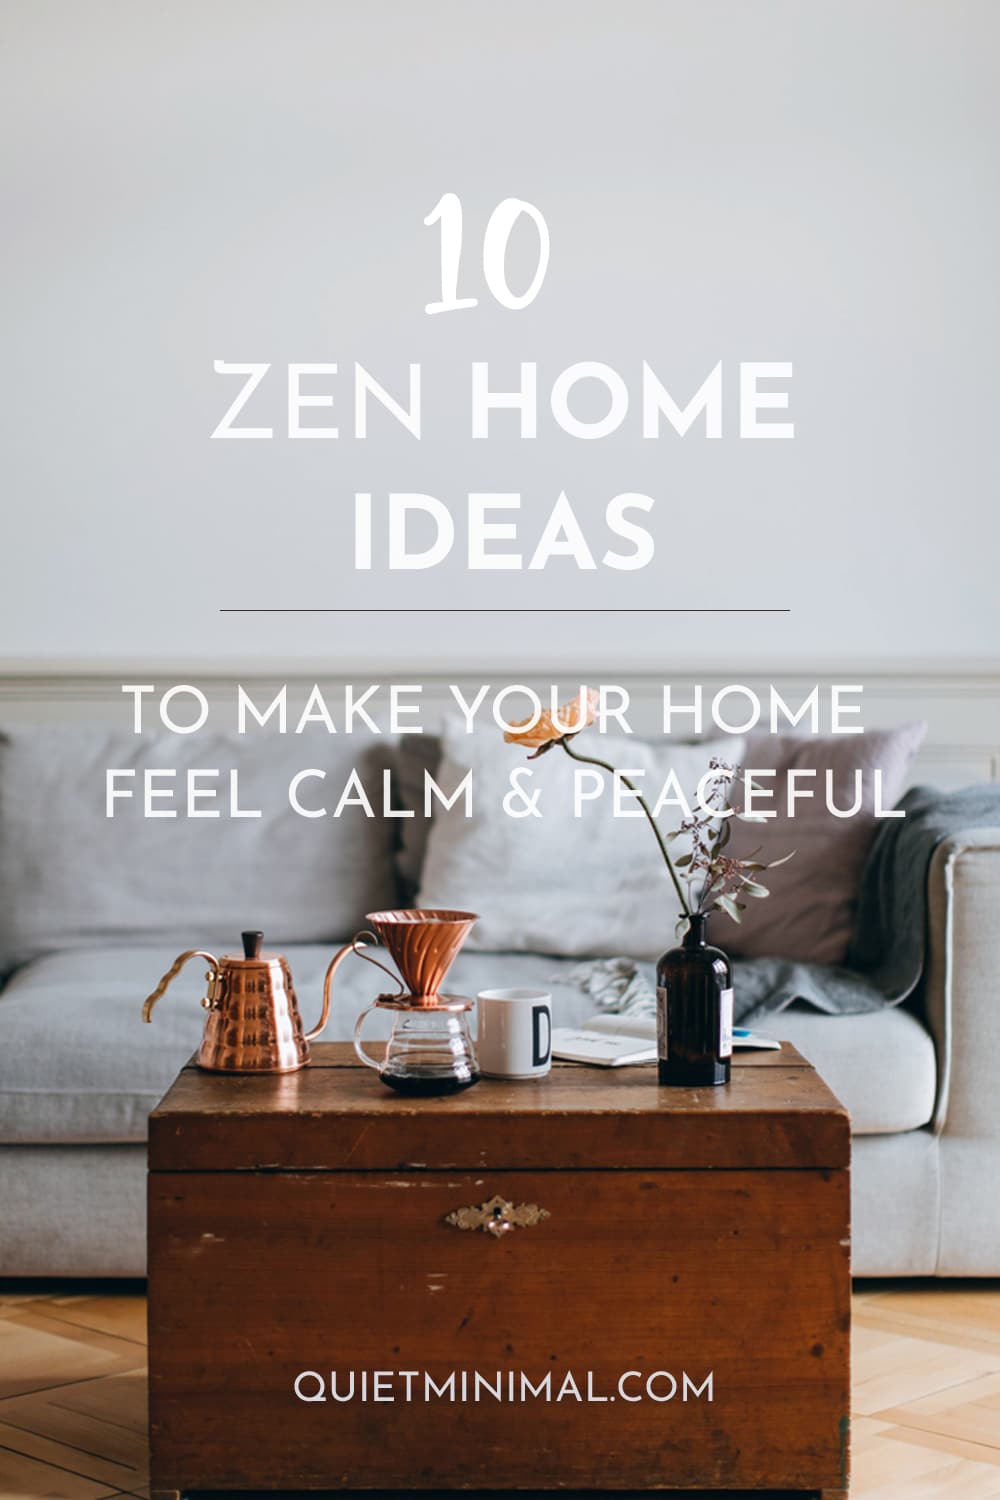 Zon home ideas for a calm and peaceful interior